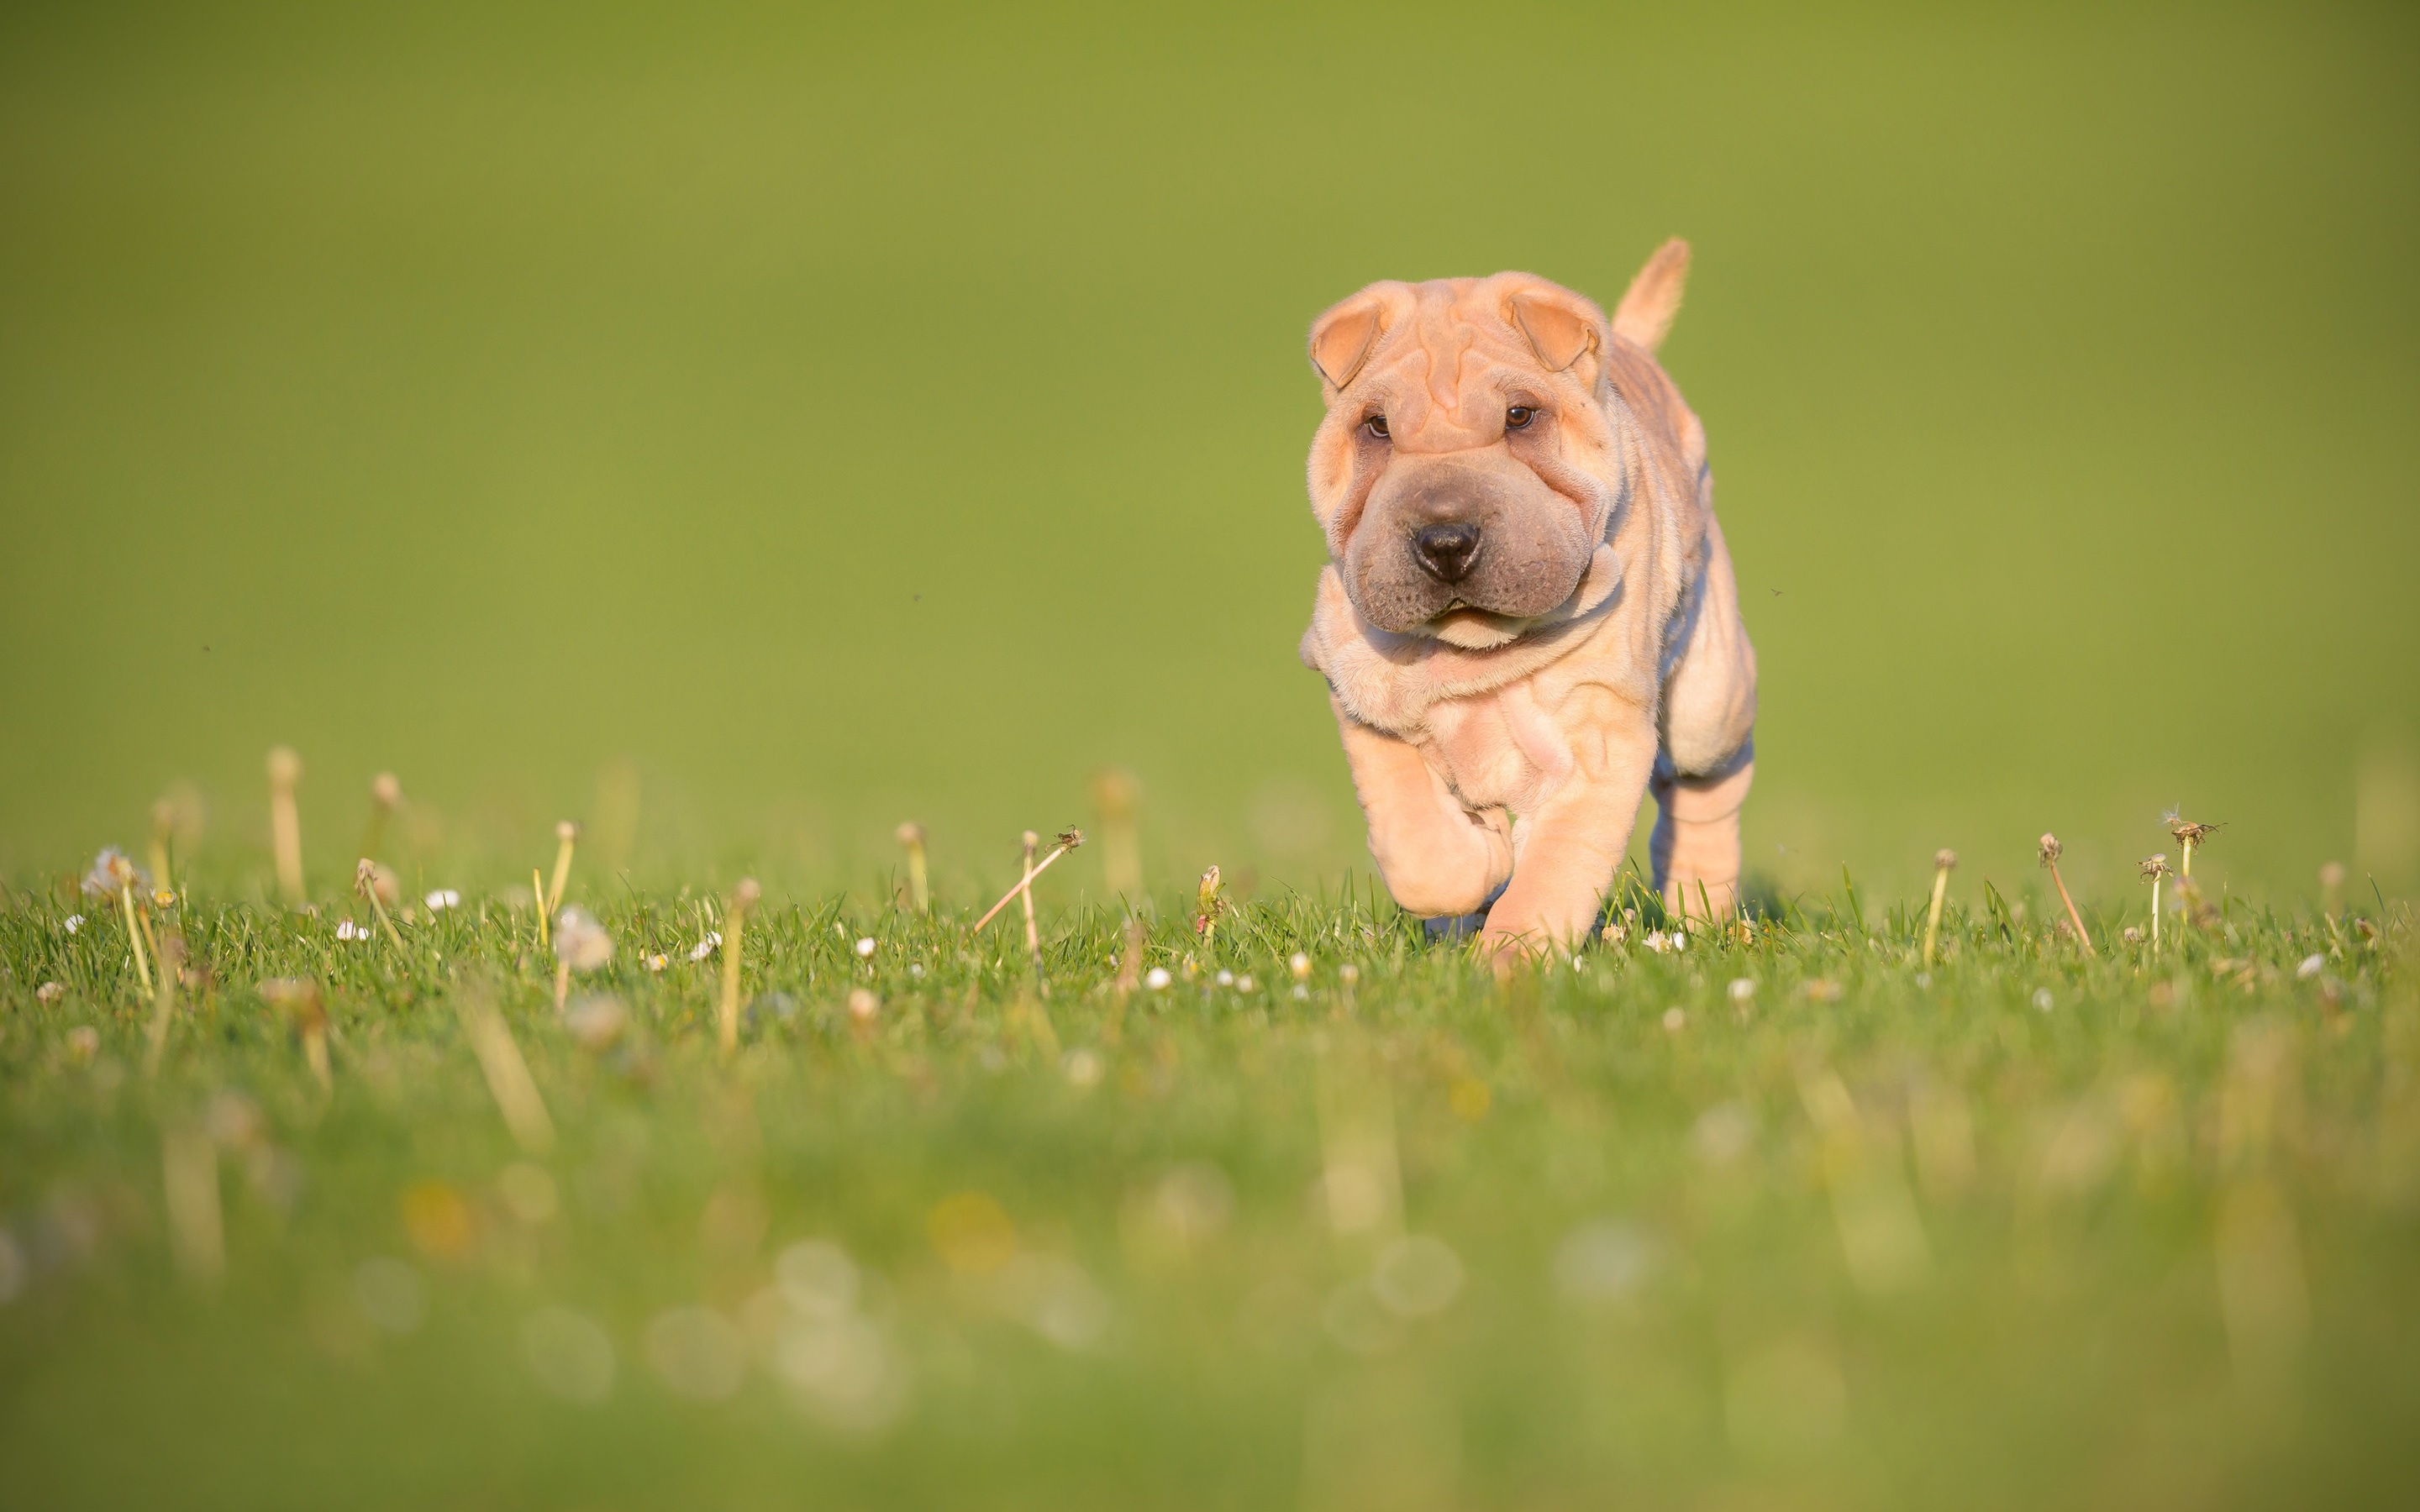 A Shar Pei puppy running in the yard